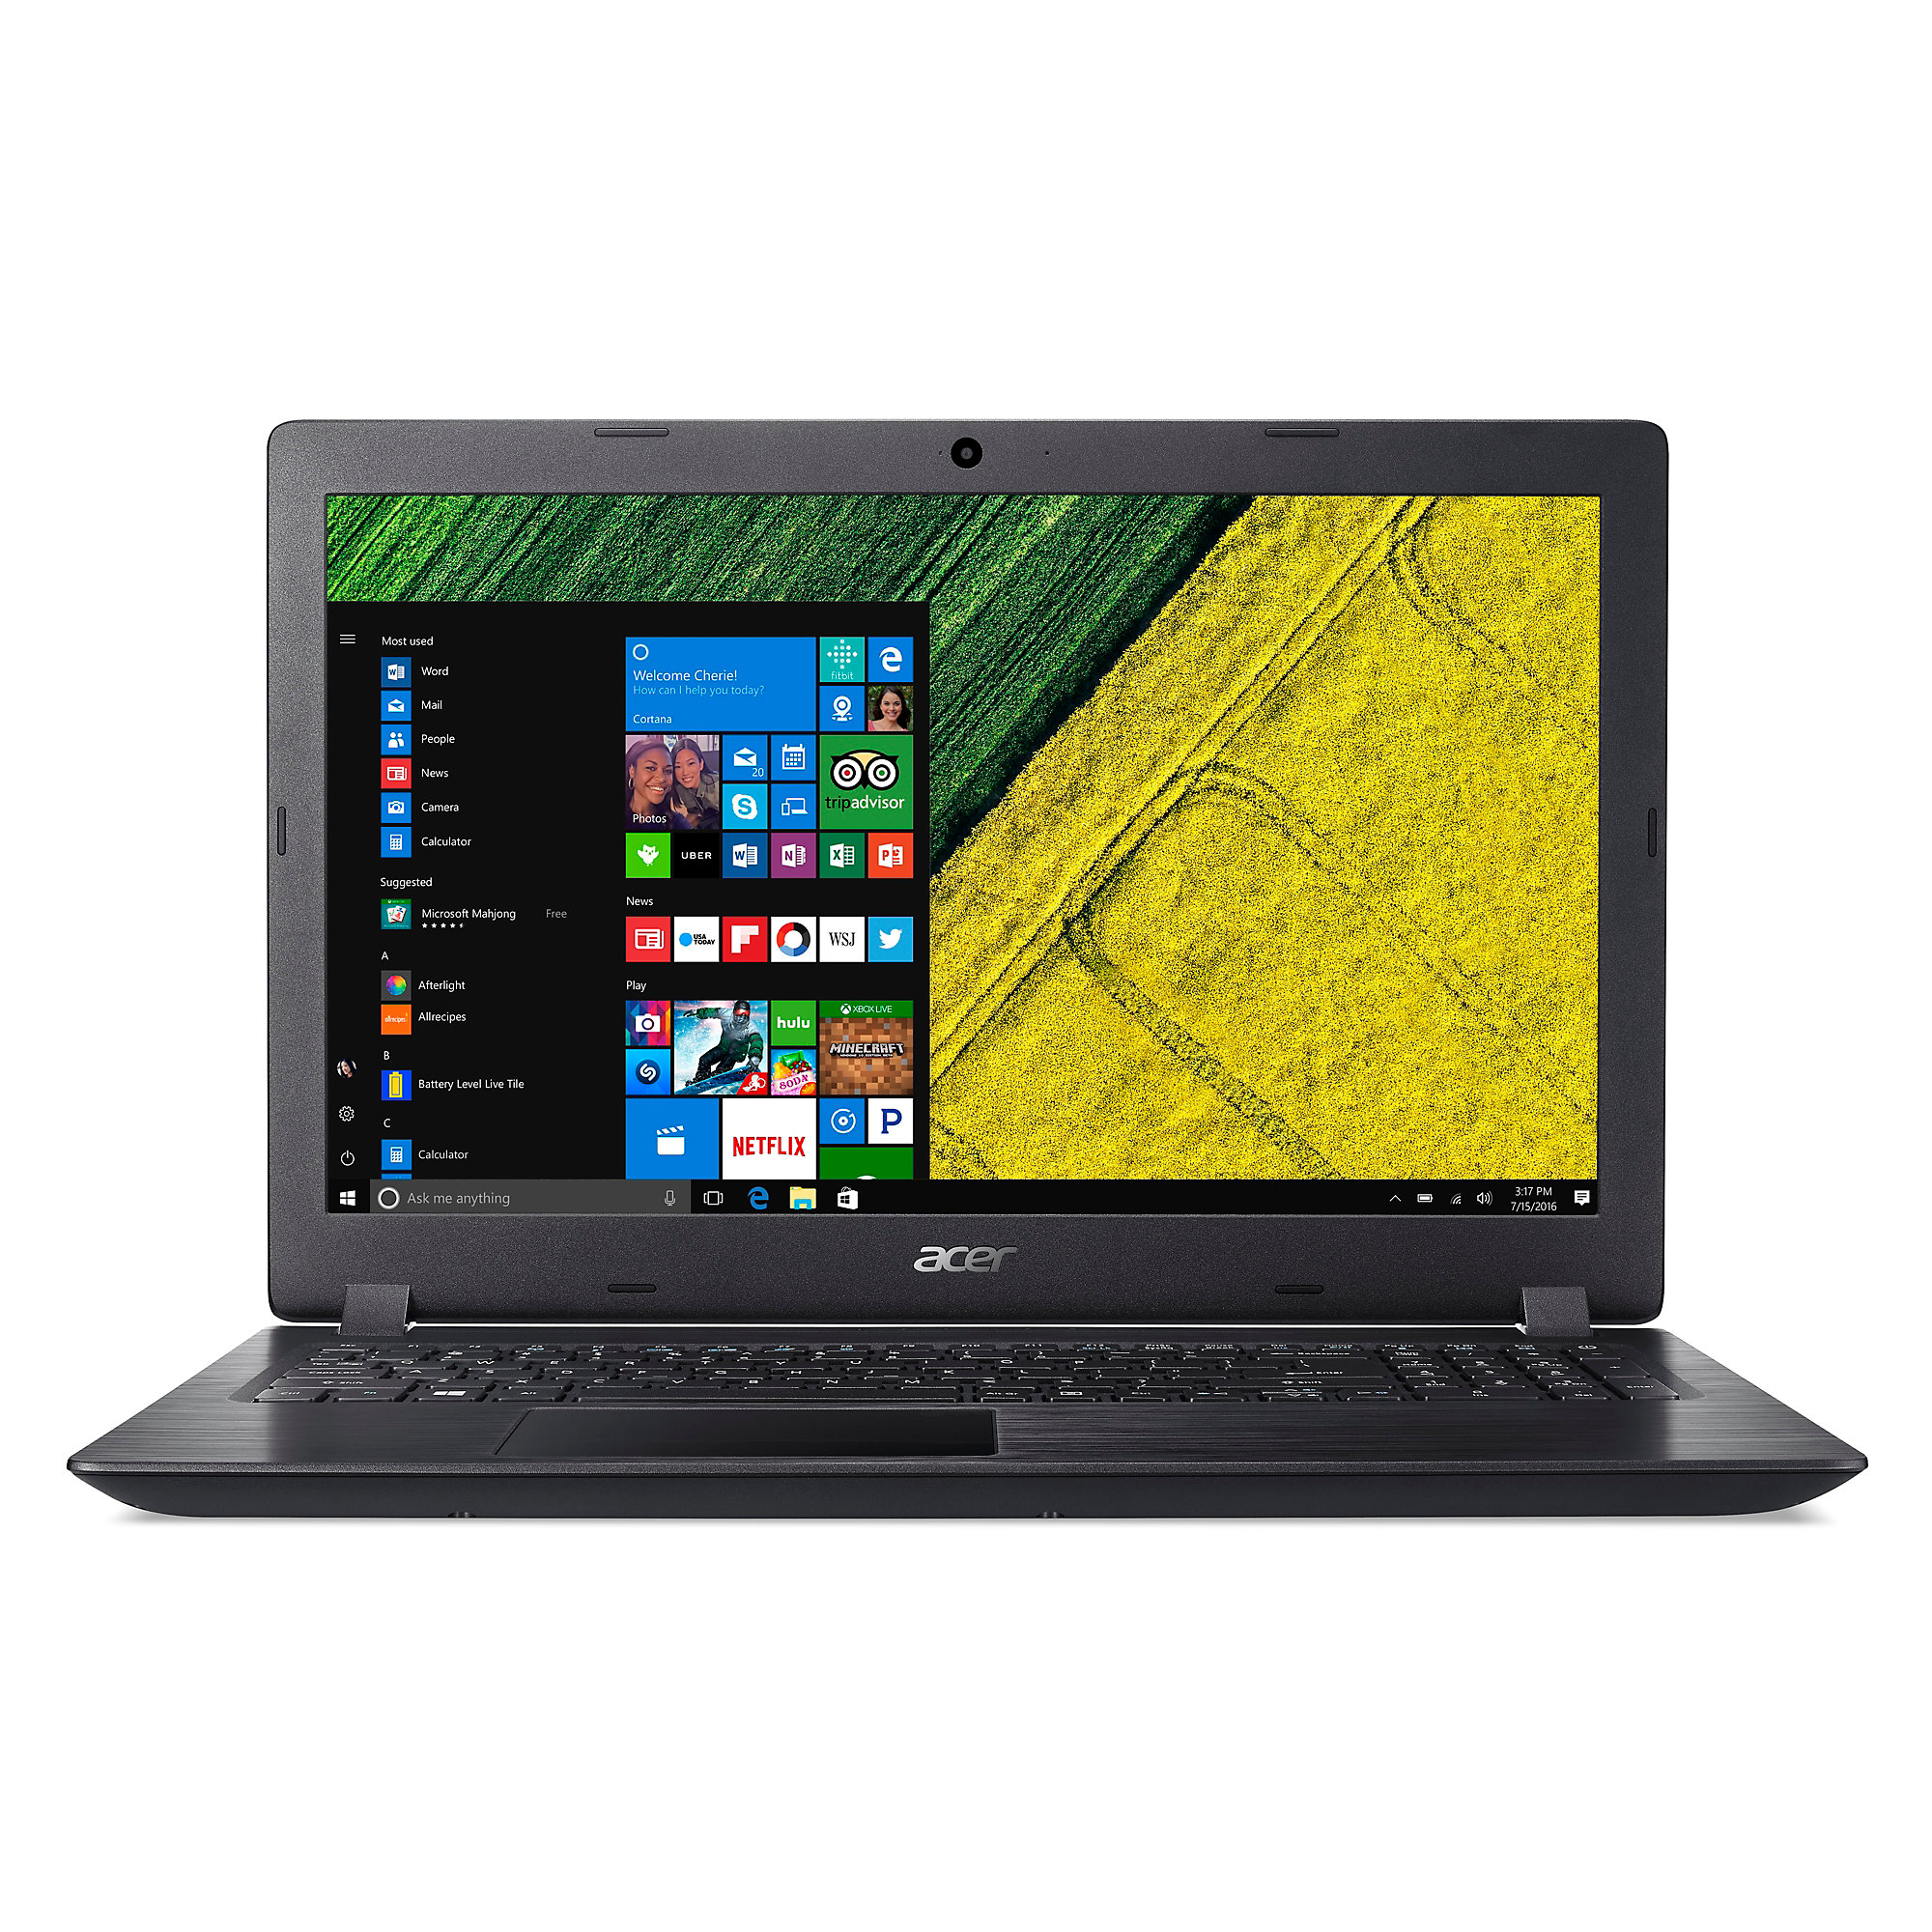 twee weken Plaats Initiatief Acer Aspire 3 (i3-6006U, HD520) Laptop Review - NotebookCheck.net Reviews